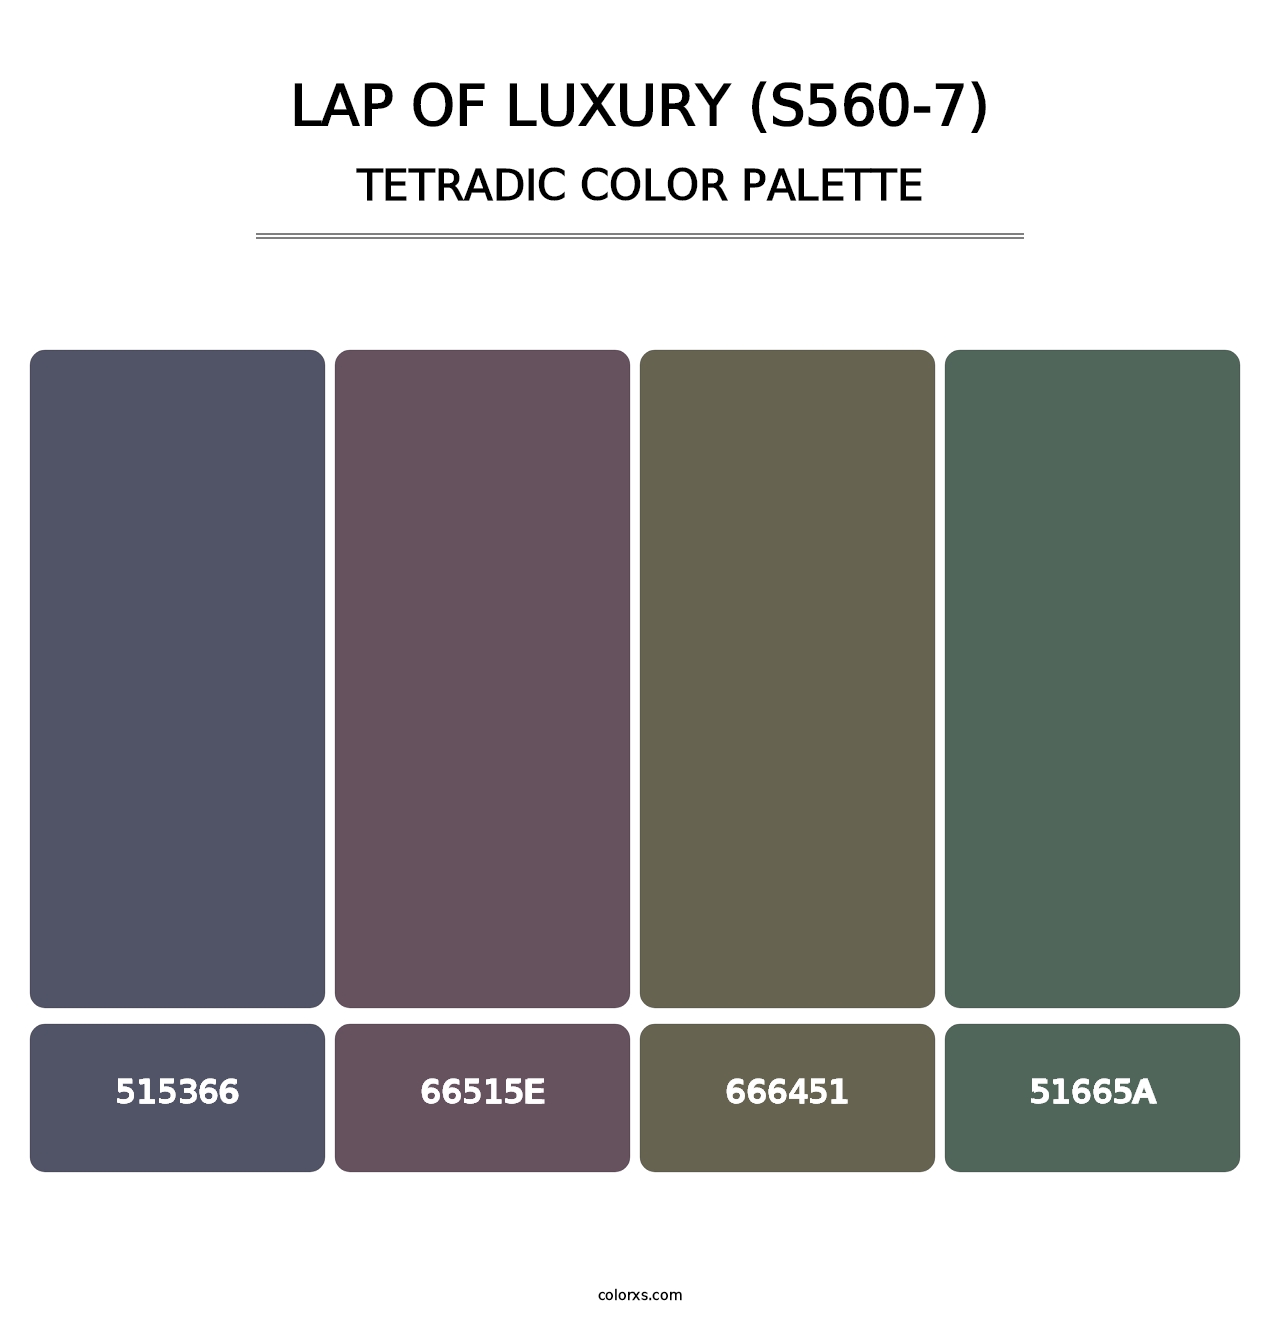 Lap Of Luxury (S560-7) - Tetradic Color Palette